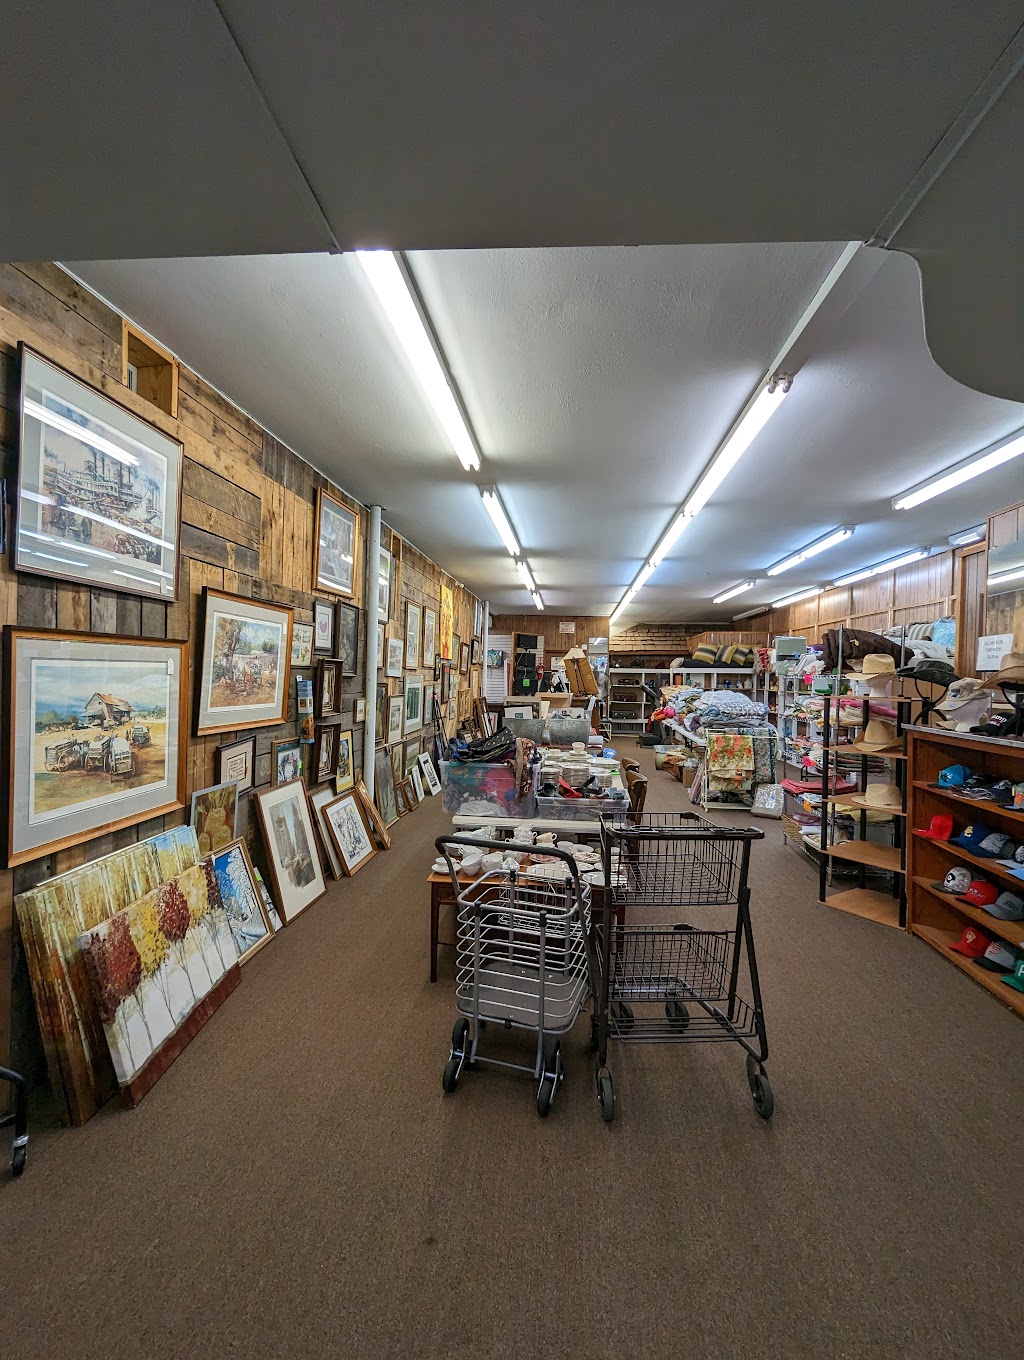 The Prowler Variety Shop | 2464 E Main St, Lincolnton, NC 28092, USA | Phone: (980) 429-2063